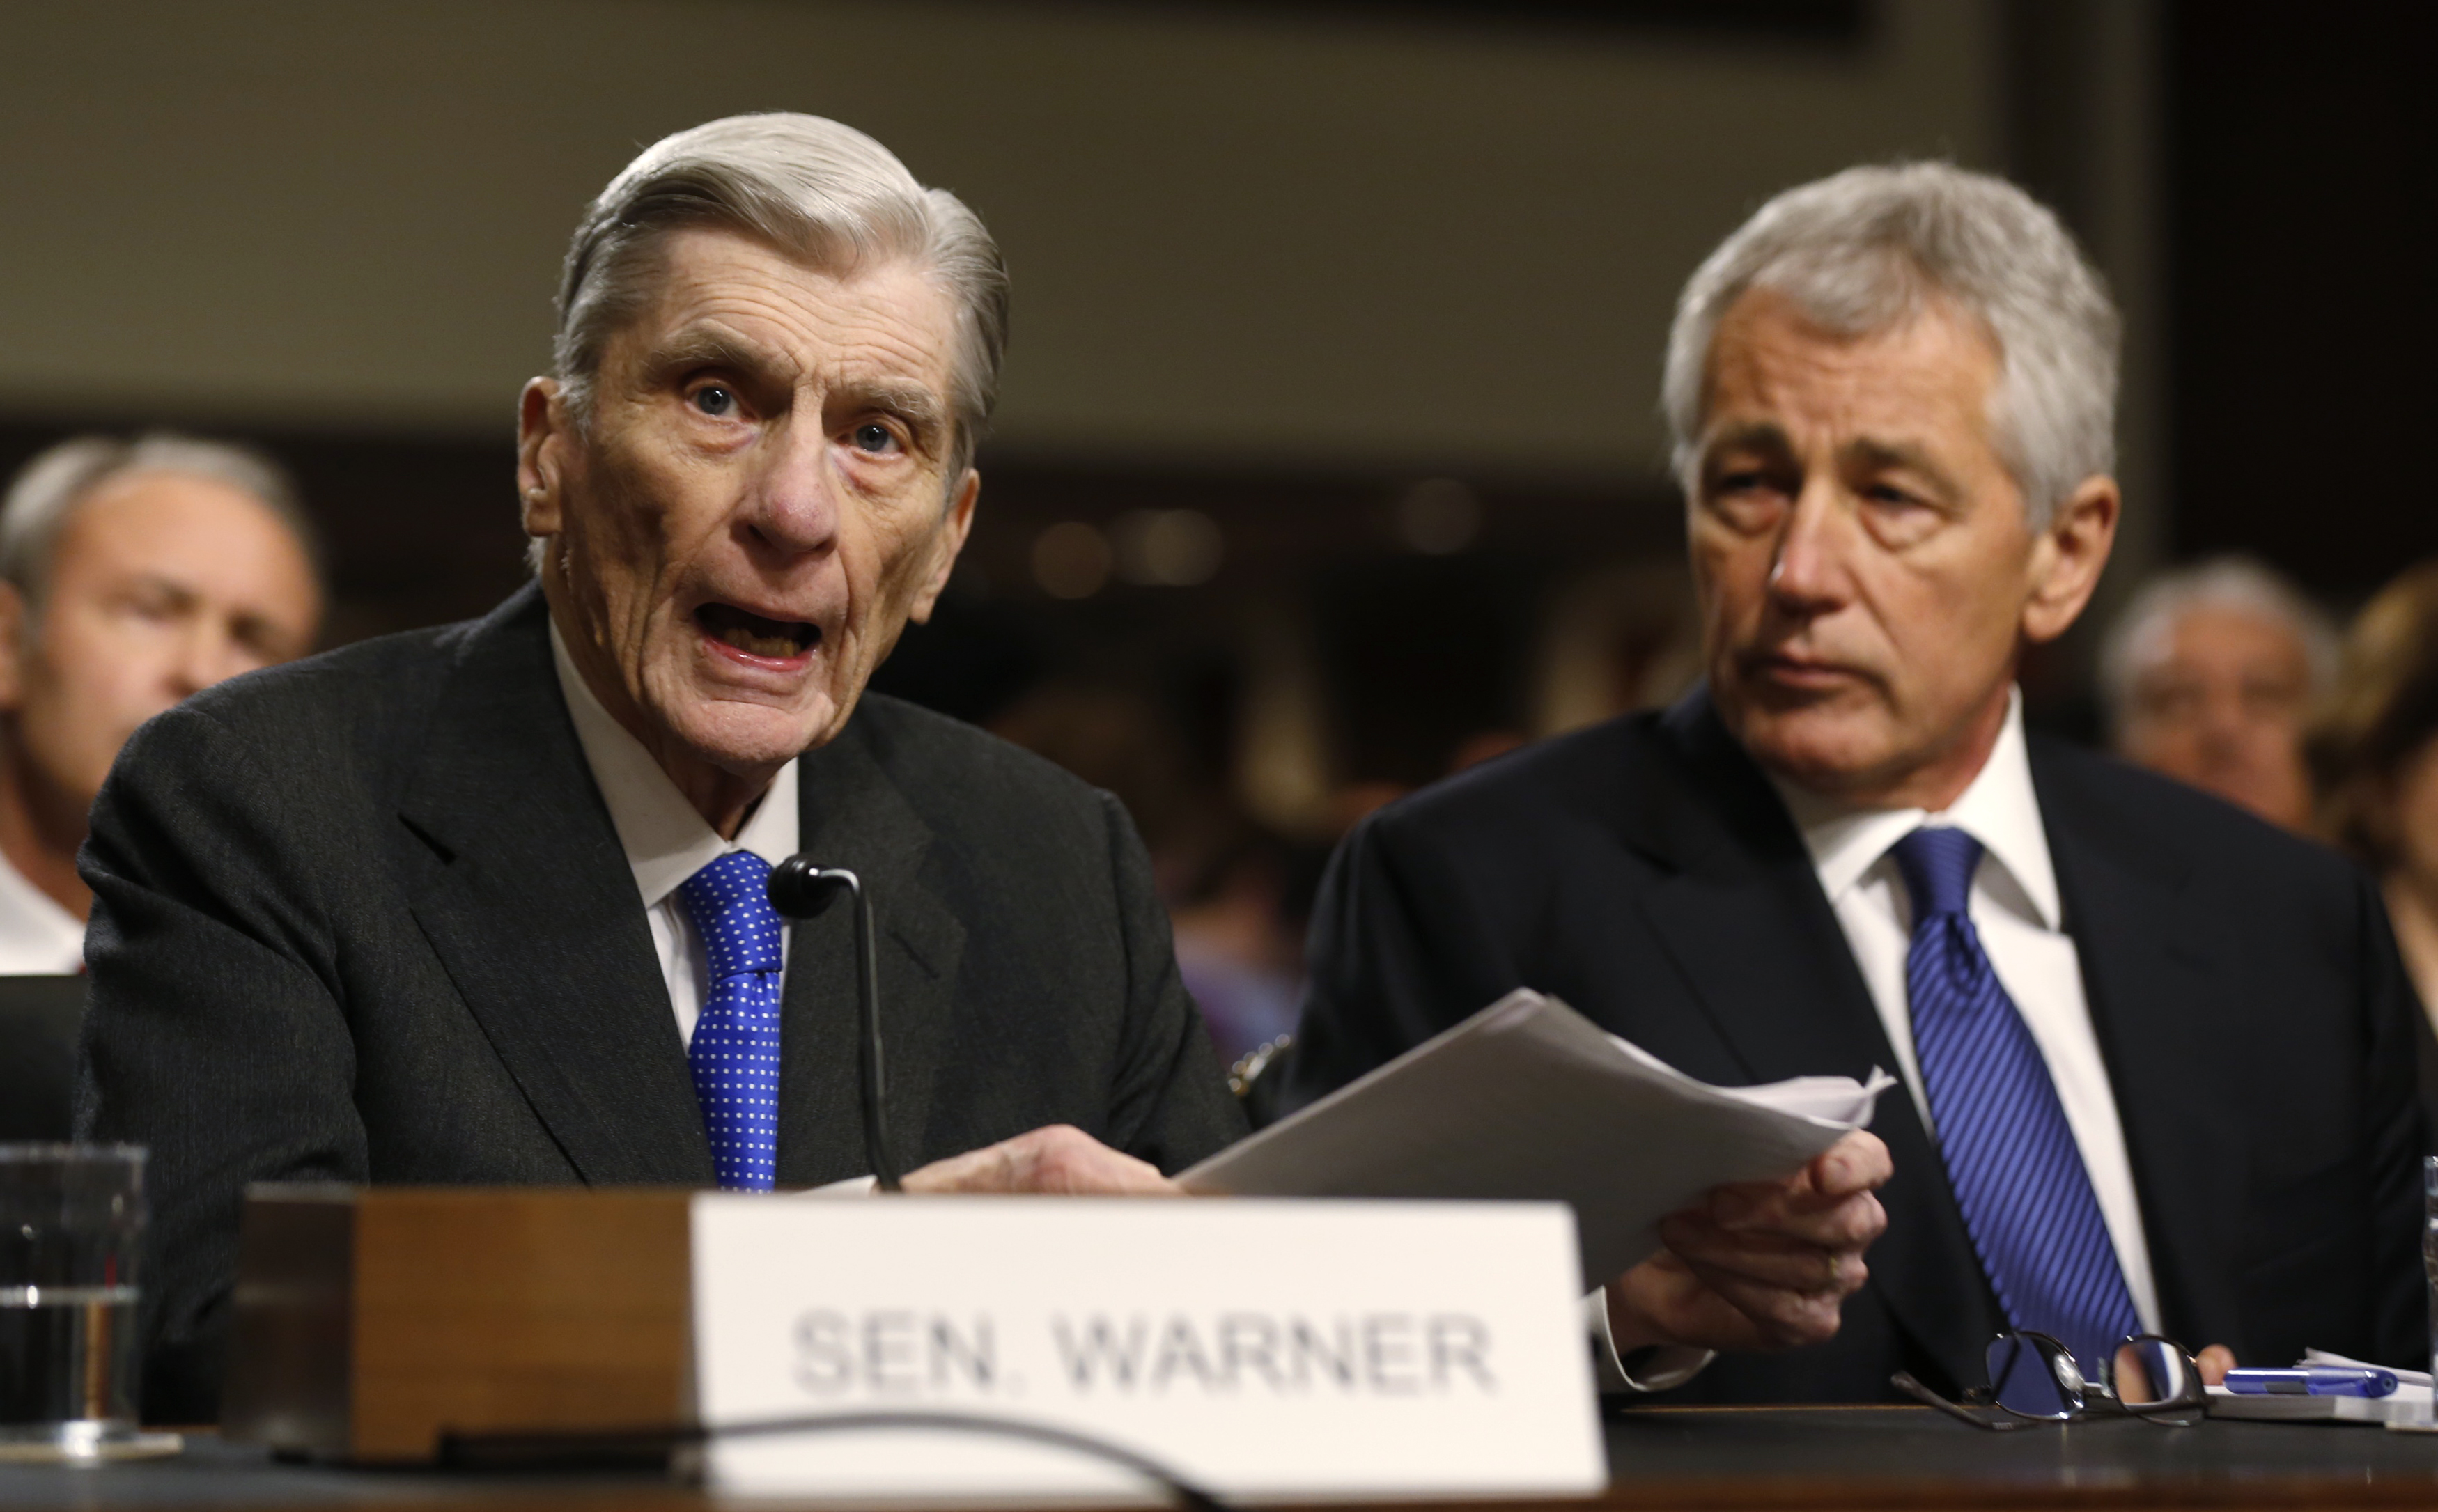 Former U.S. Senator Warner introduces former U.S. Senator Hagel during Senate Armed Services Committee hearing on his nomination to be Defense Secretary, on Capitol Hill in Washington